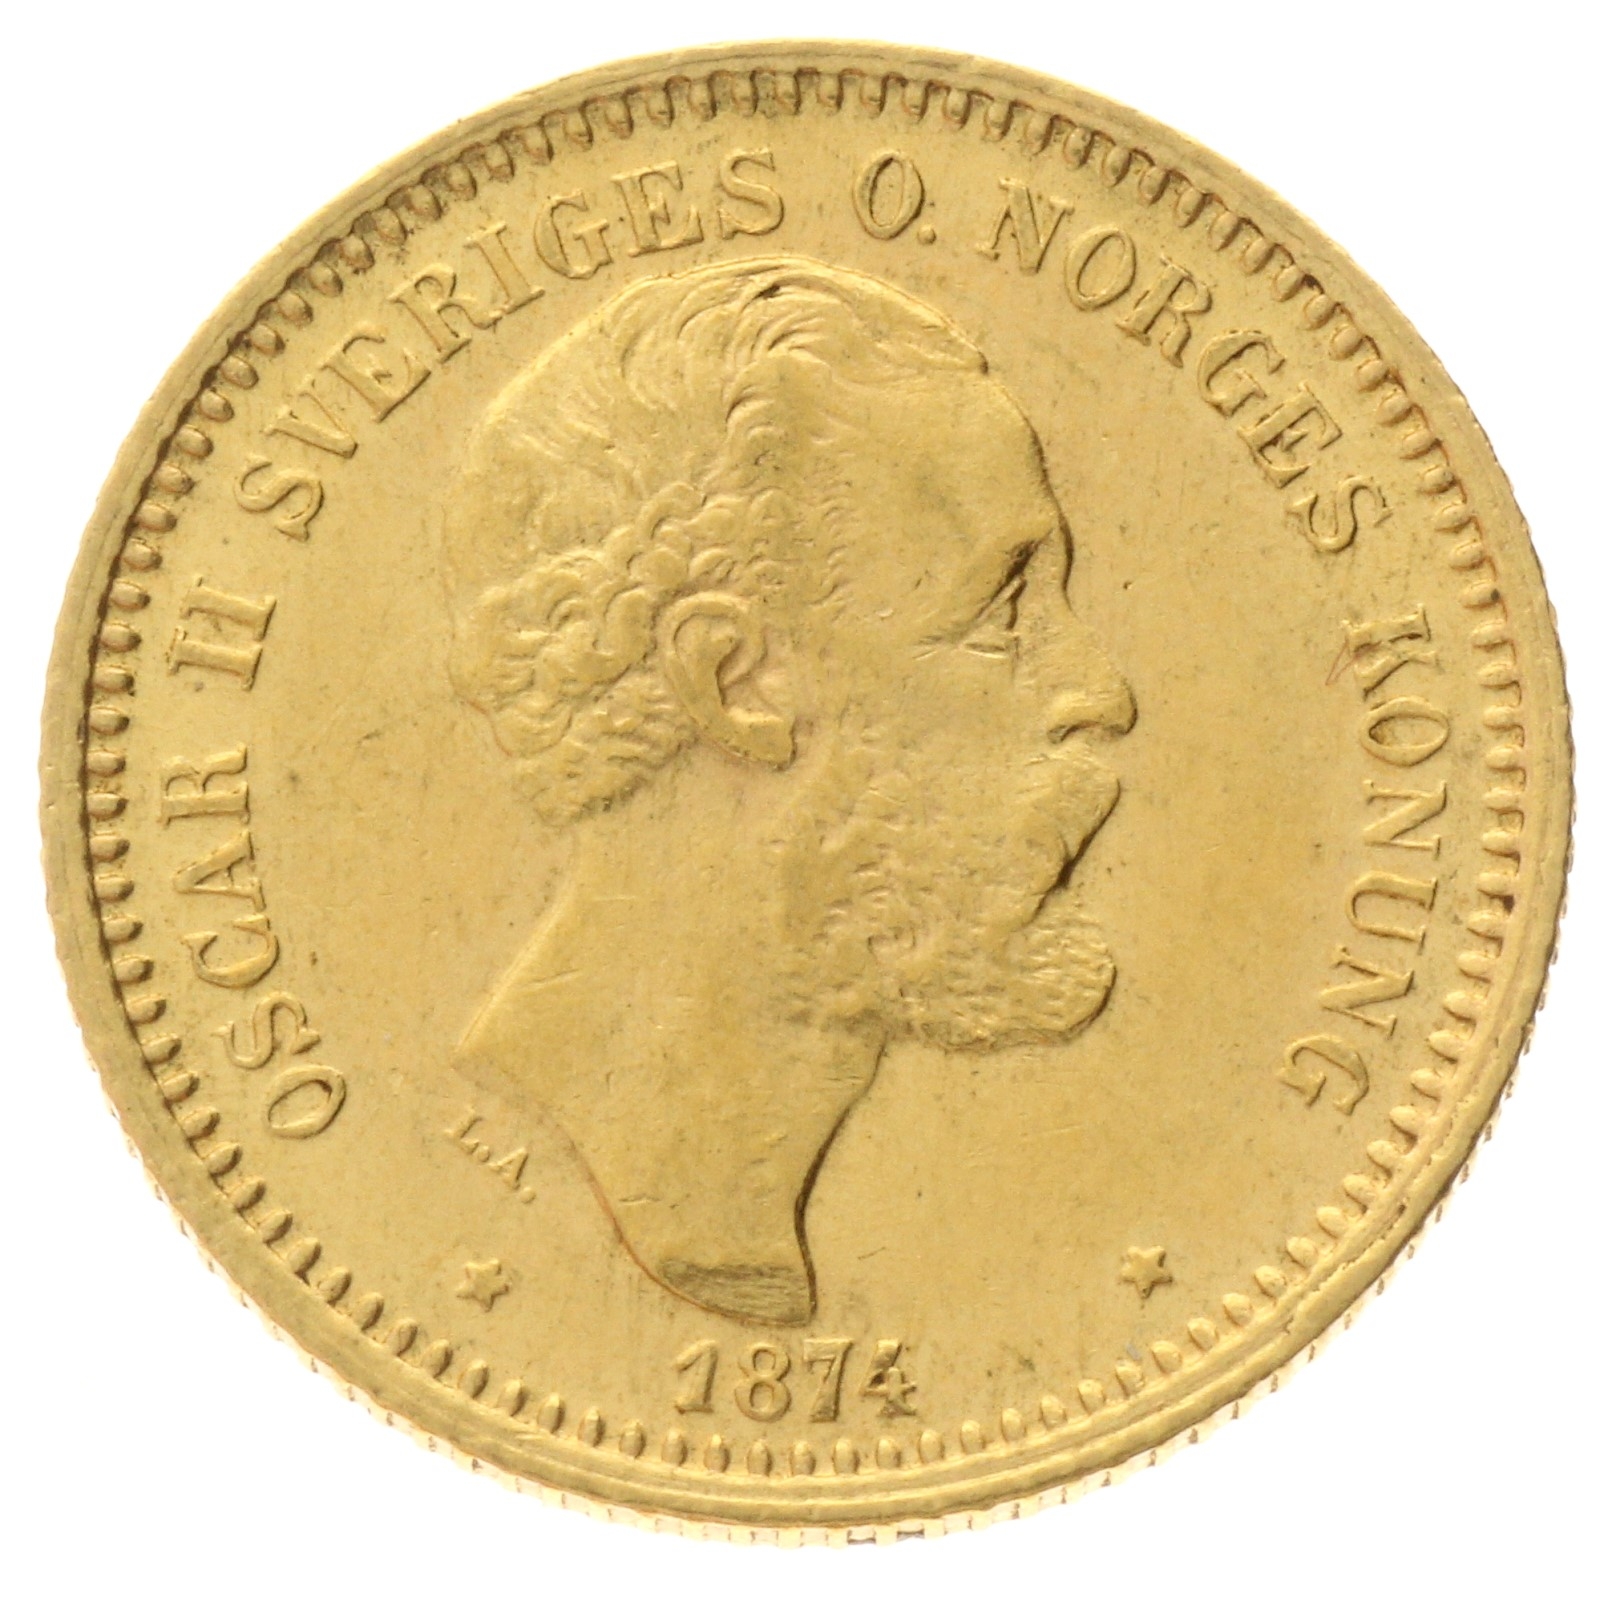 Sweden - 10 kronor - 1874 - Oscar II